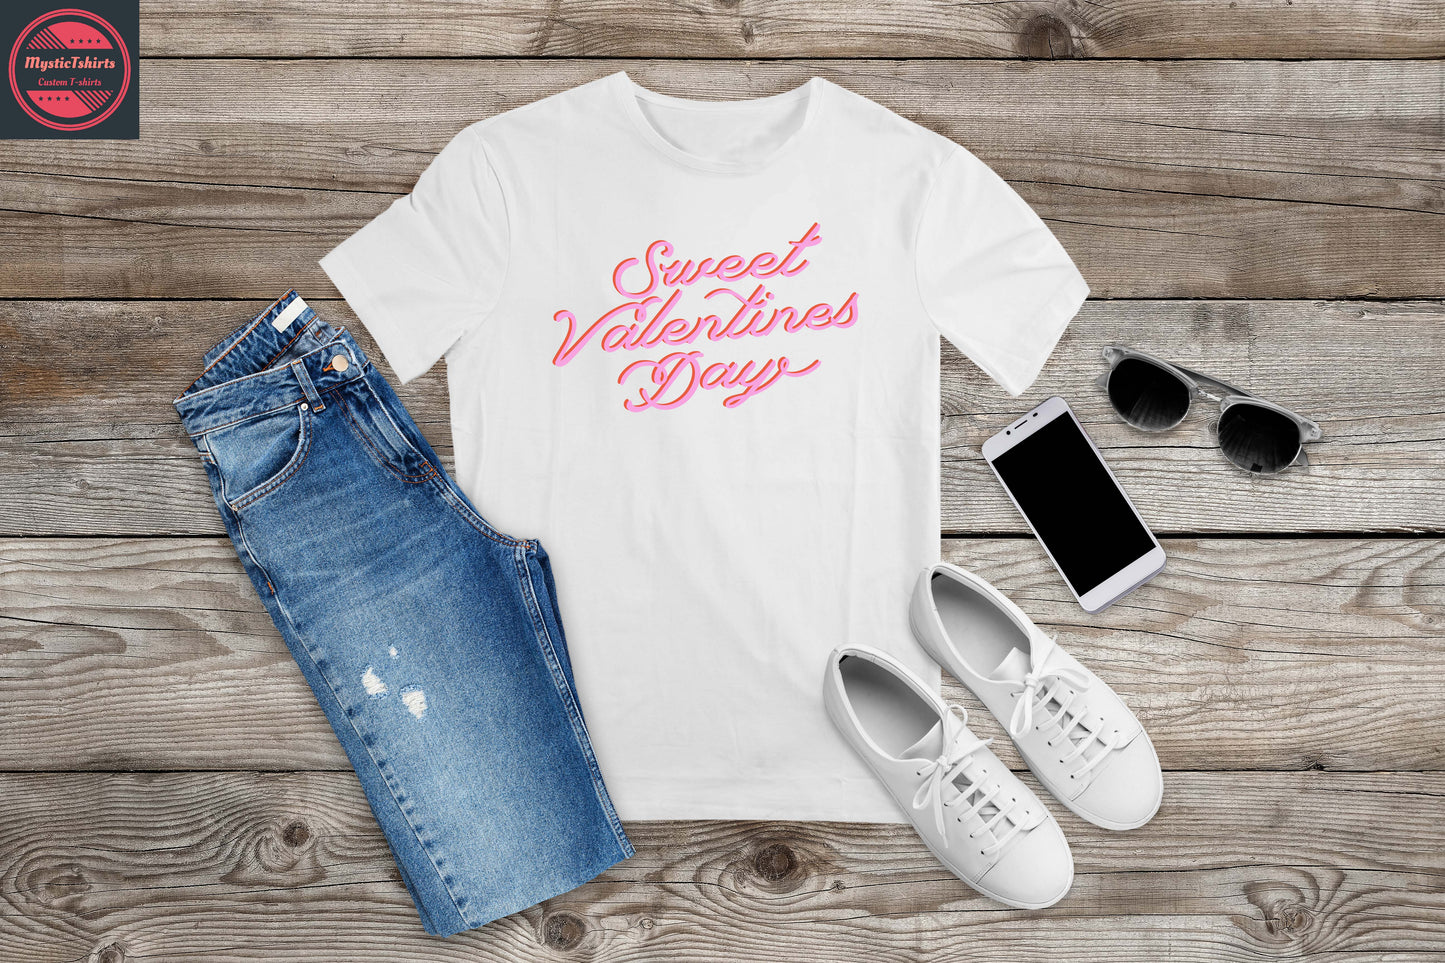 296. LOVE/VALENTINE SWEET VALENTINES DAY, Custom Made Shirt, Personalized T-Shirt, Custom Text, Make Your Own Shirt, Custom Tee